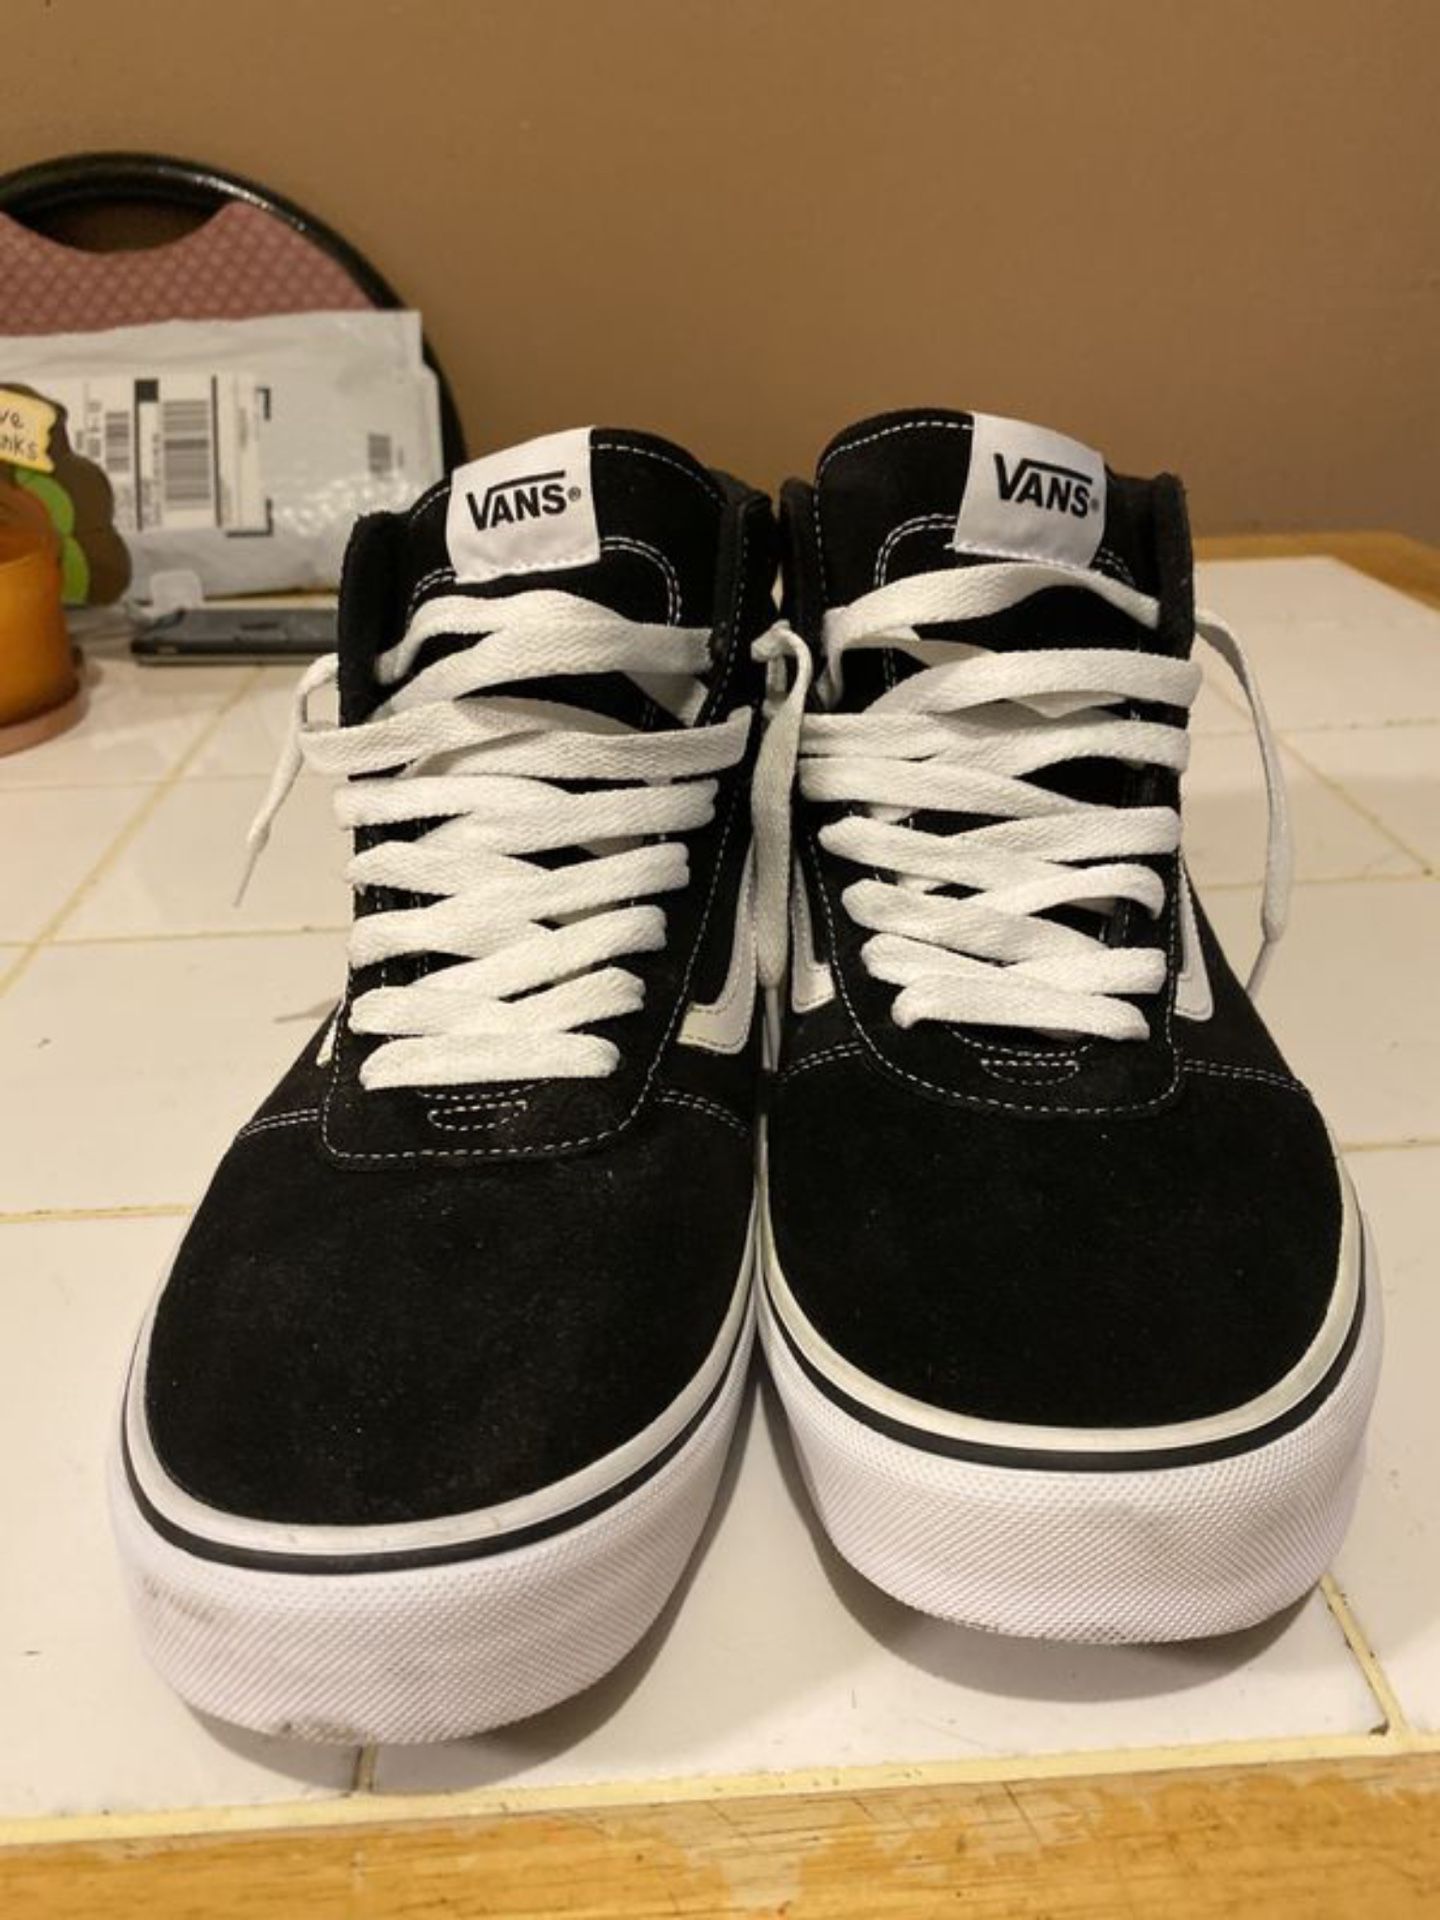 VANS Skate shoes black suede size 13 men’s